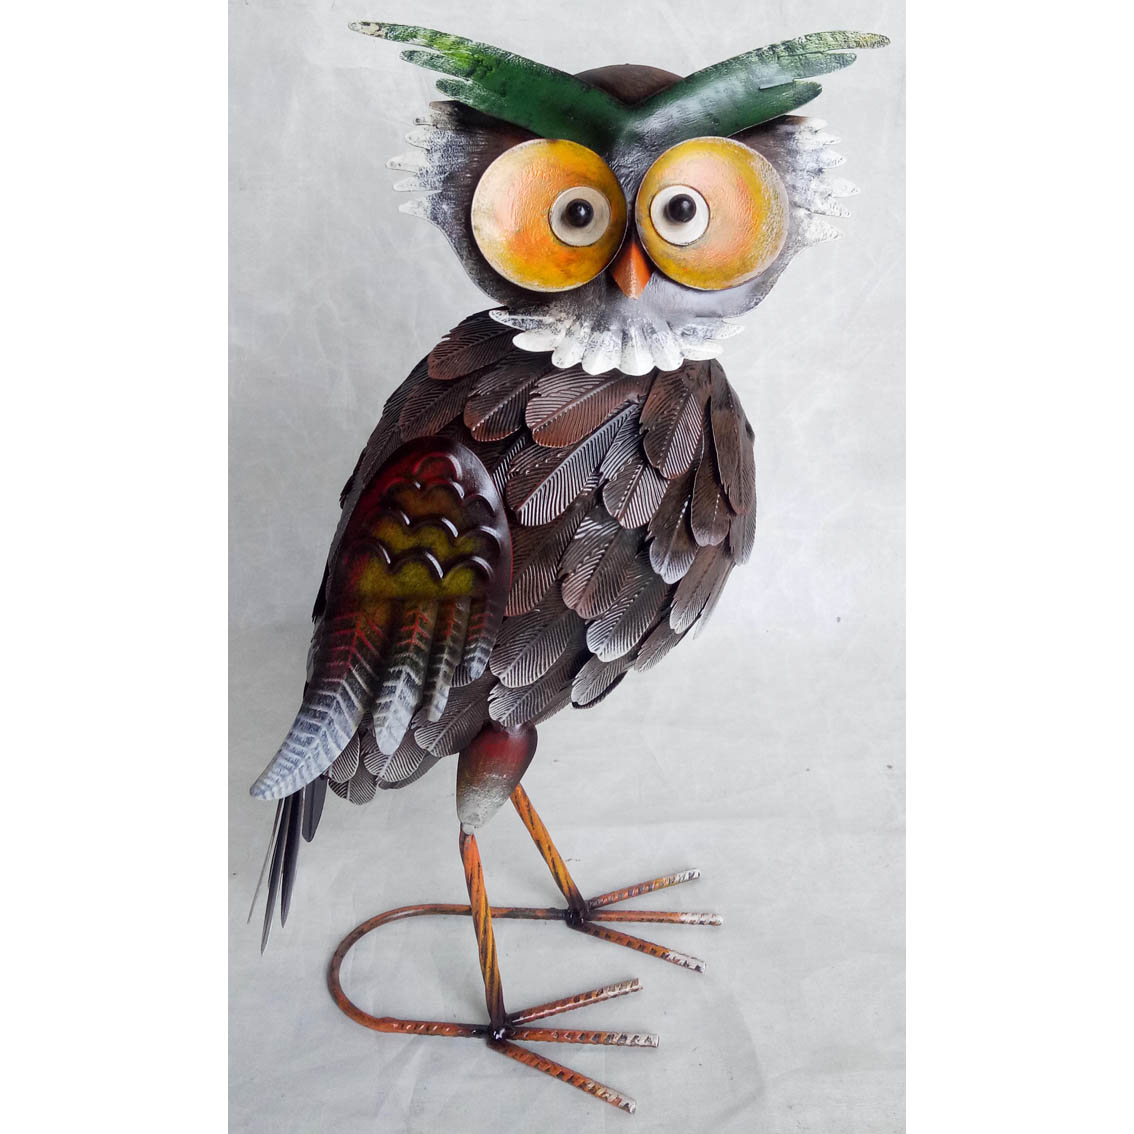 Hand-made metal garden decor owl ornament